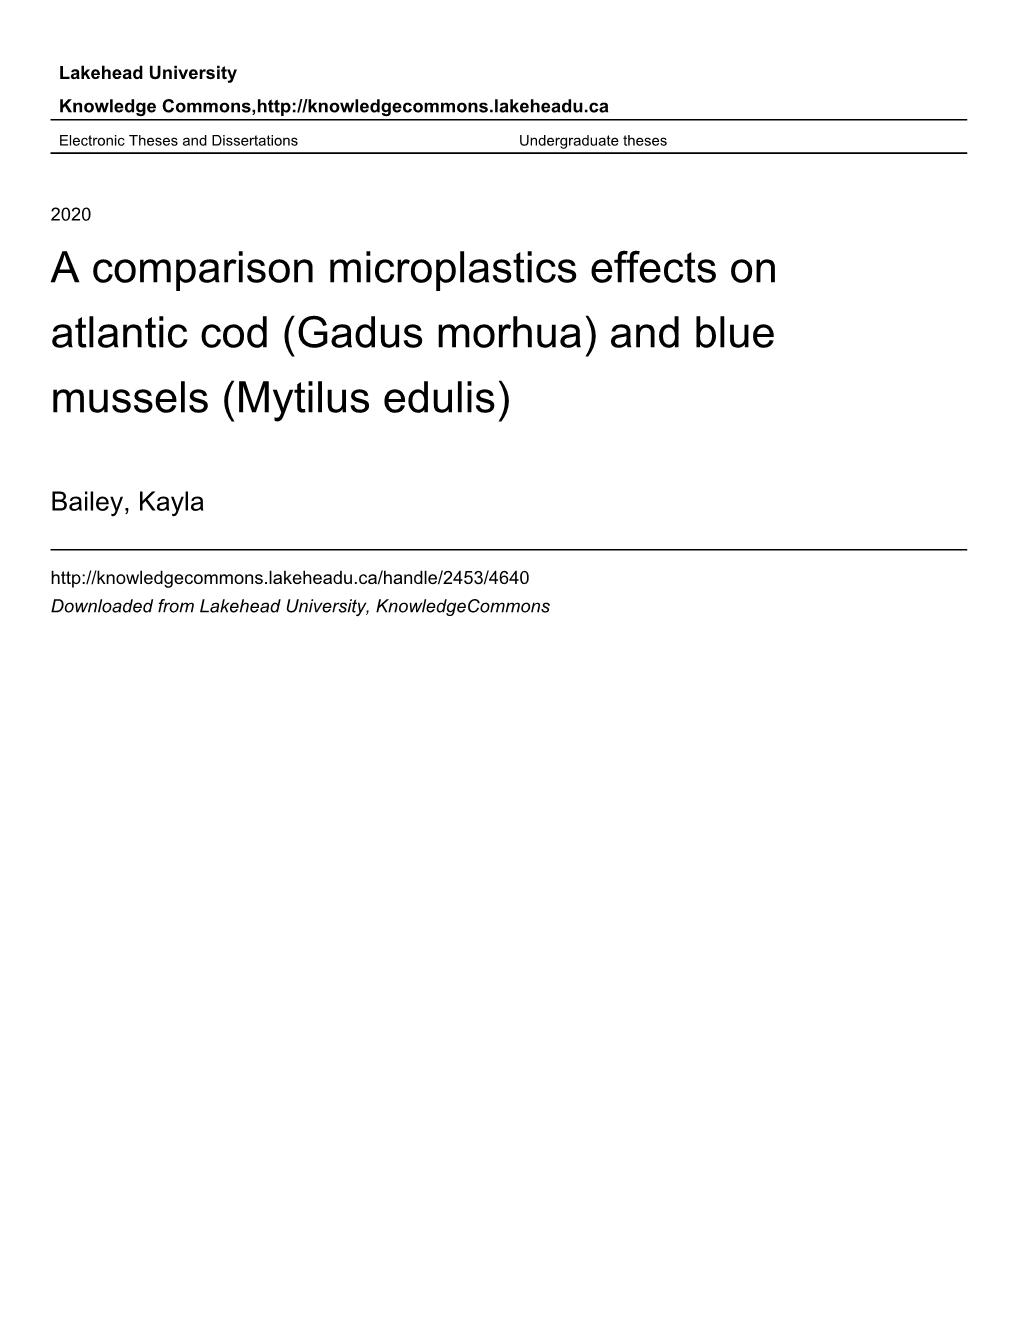 Gadus Morhua) and Blue Mussels (Mytilus Edulis